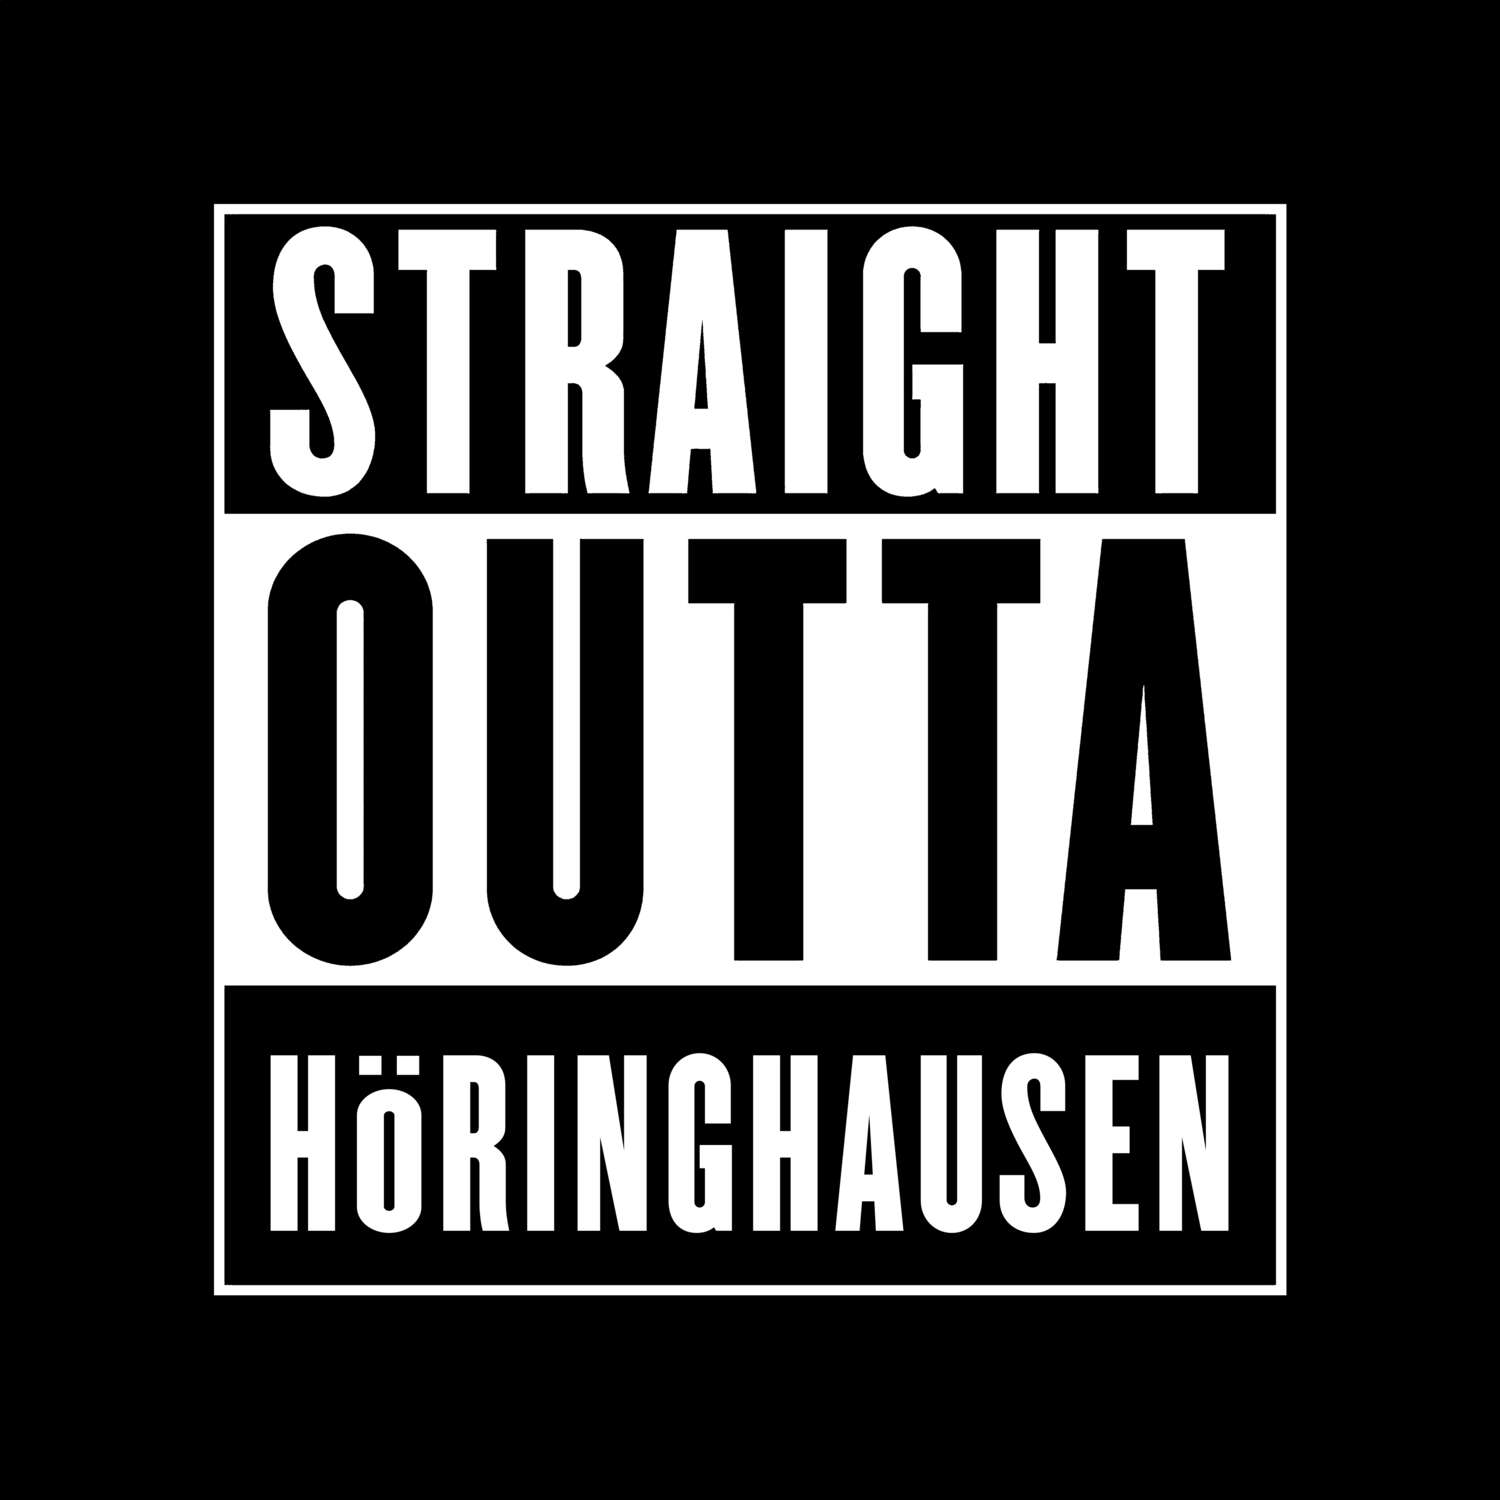 Höringhausen T-Shirt »Straight Outta«